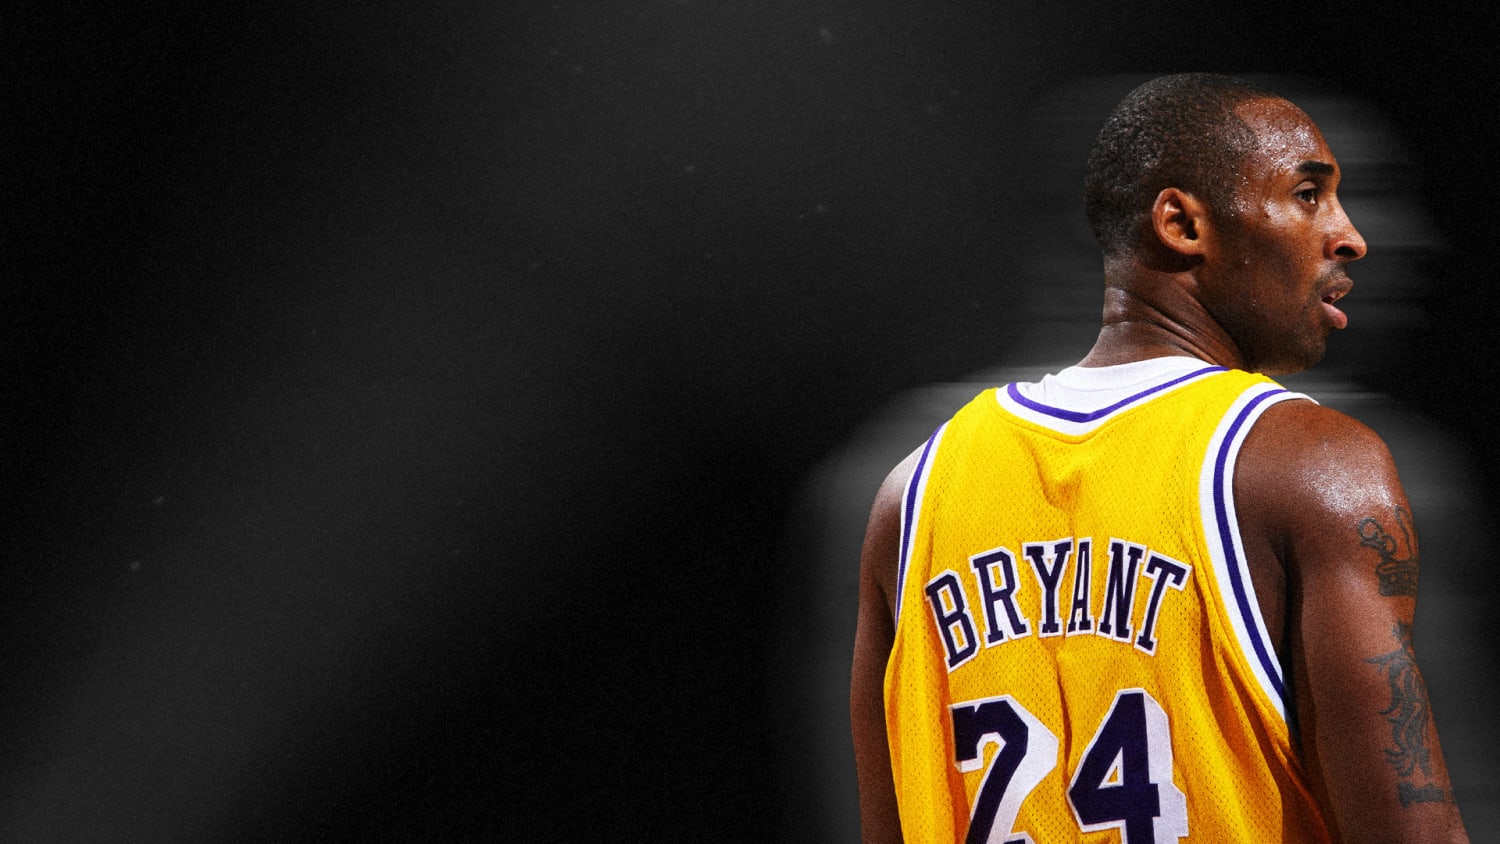 Kobe Bryant: More than Basketball – The Vision